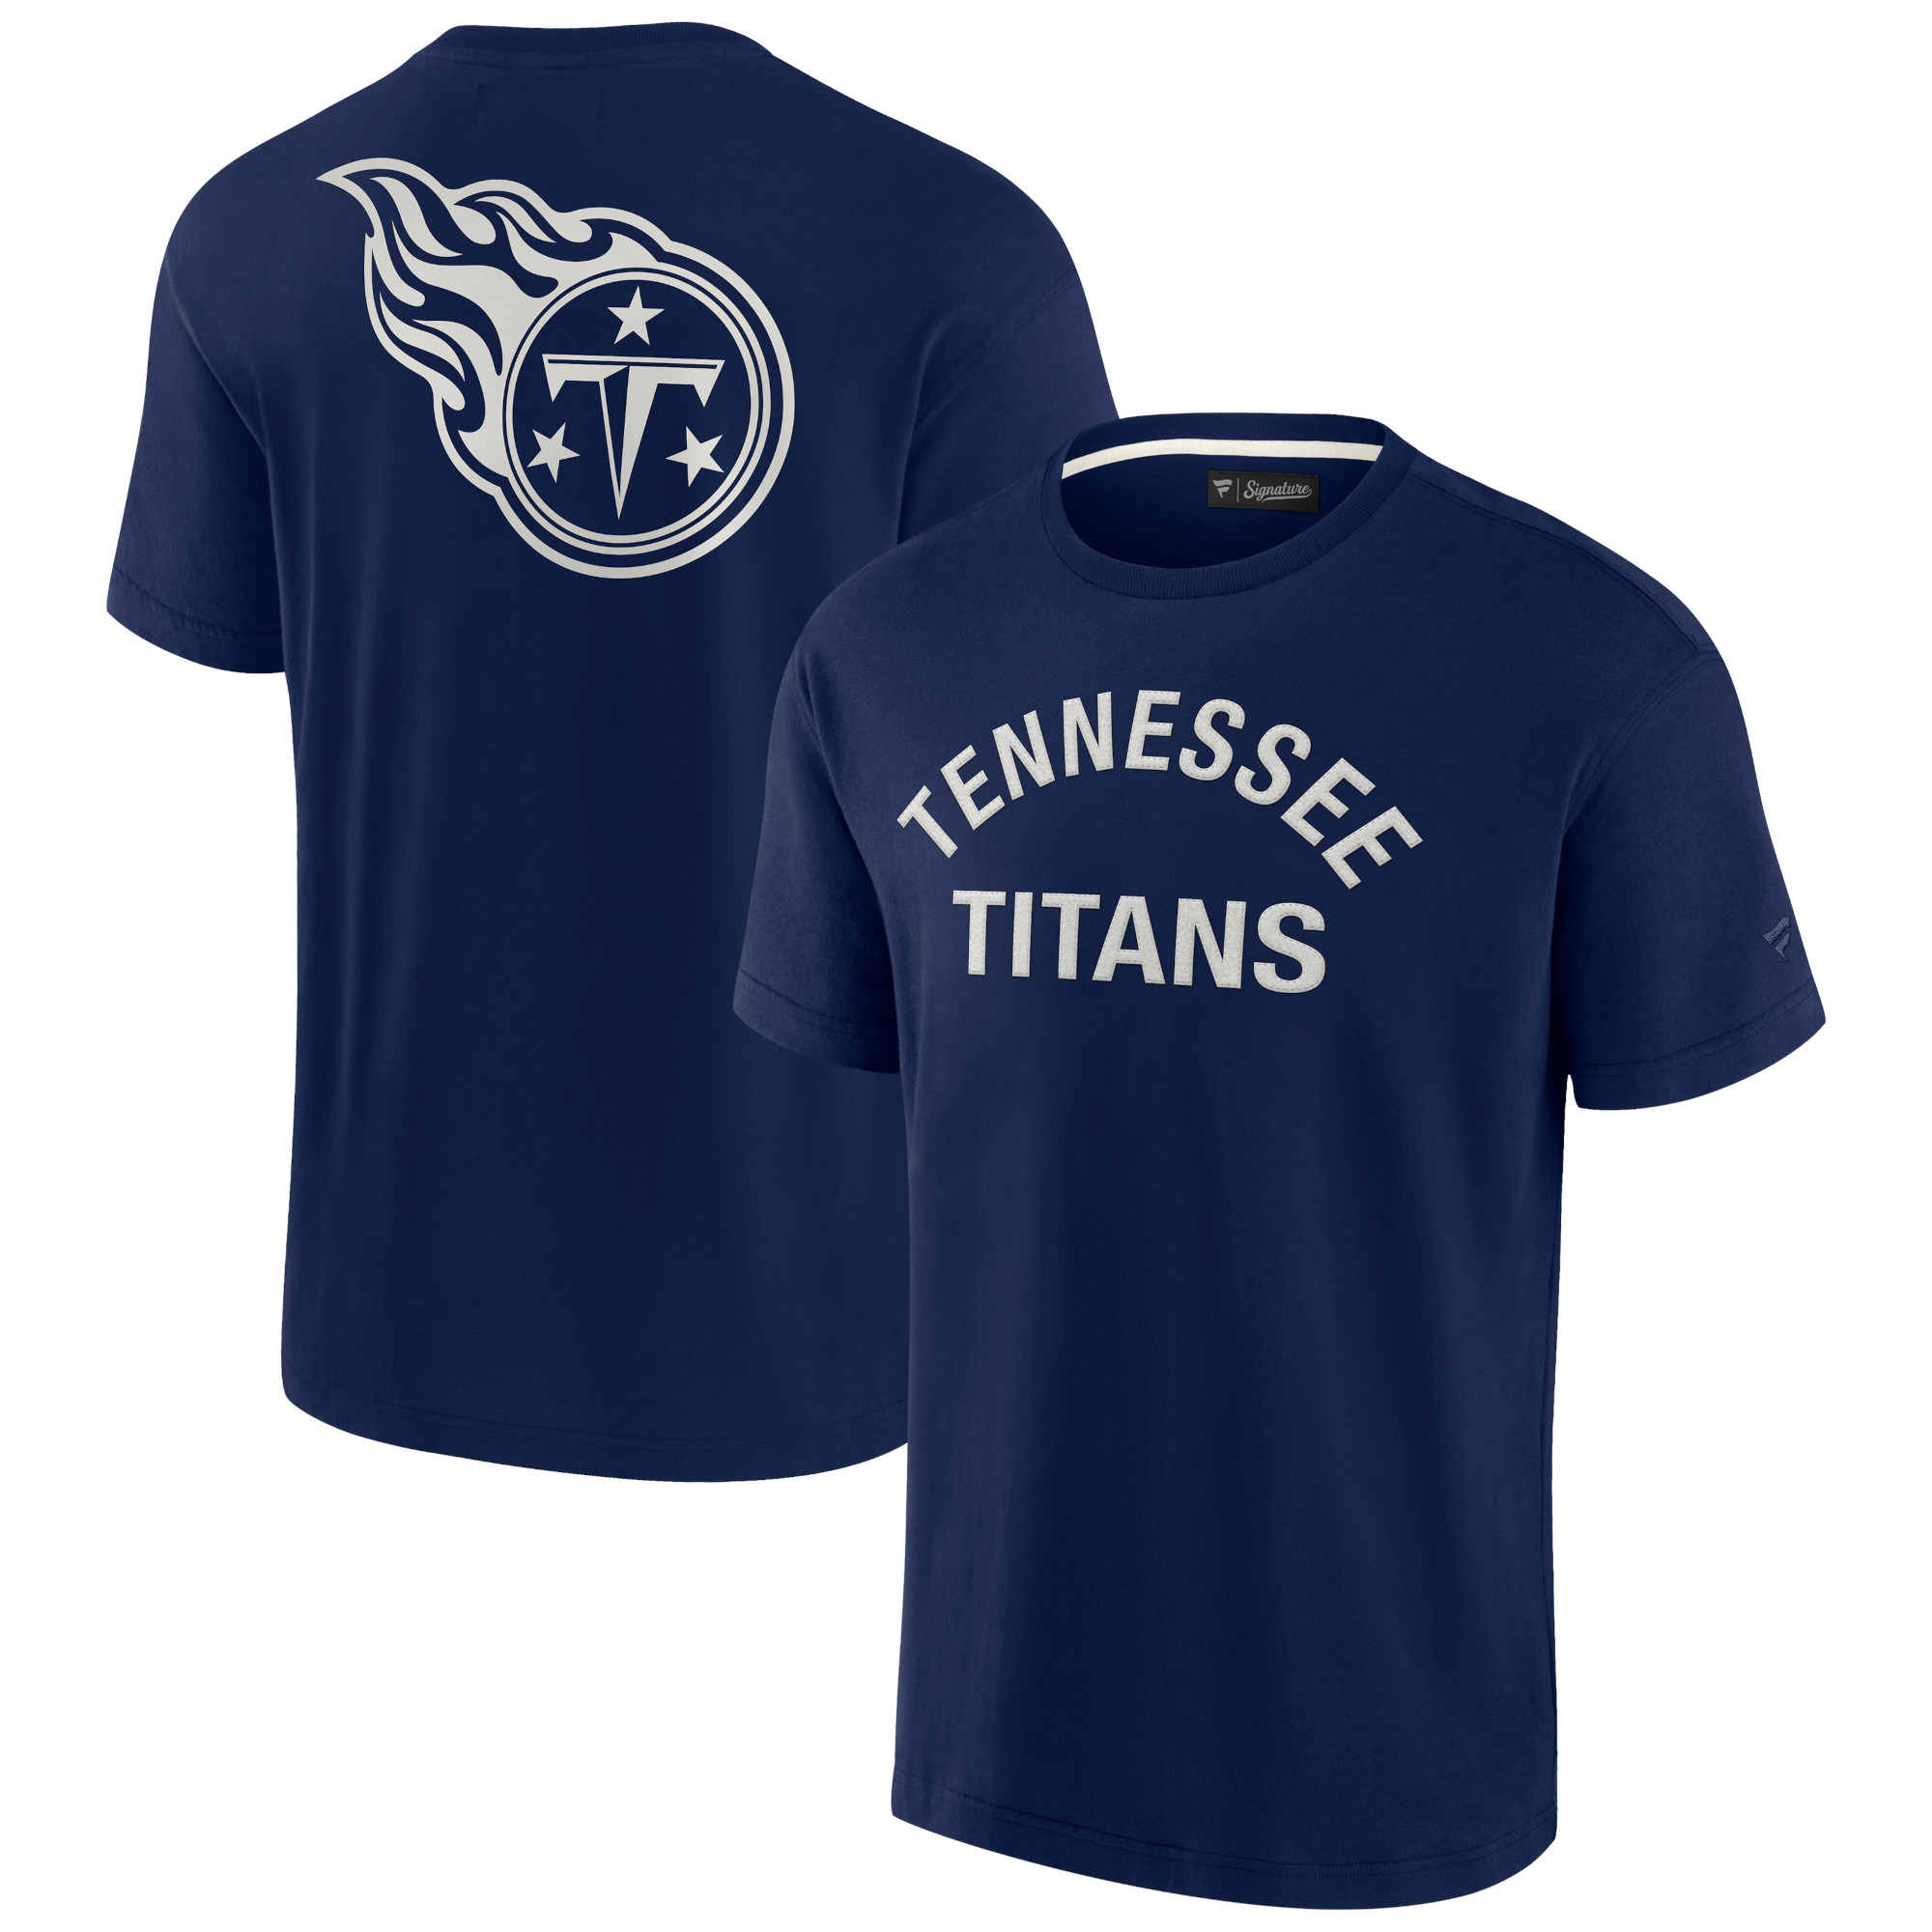 Unisex Fanatics Navy Tennessee Titans Elements Superweiches Kurzarm-T-Shirt